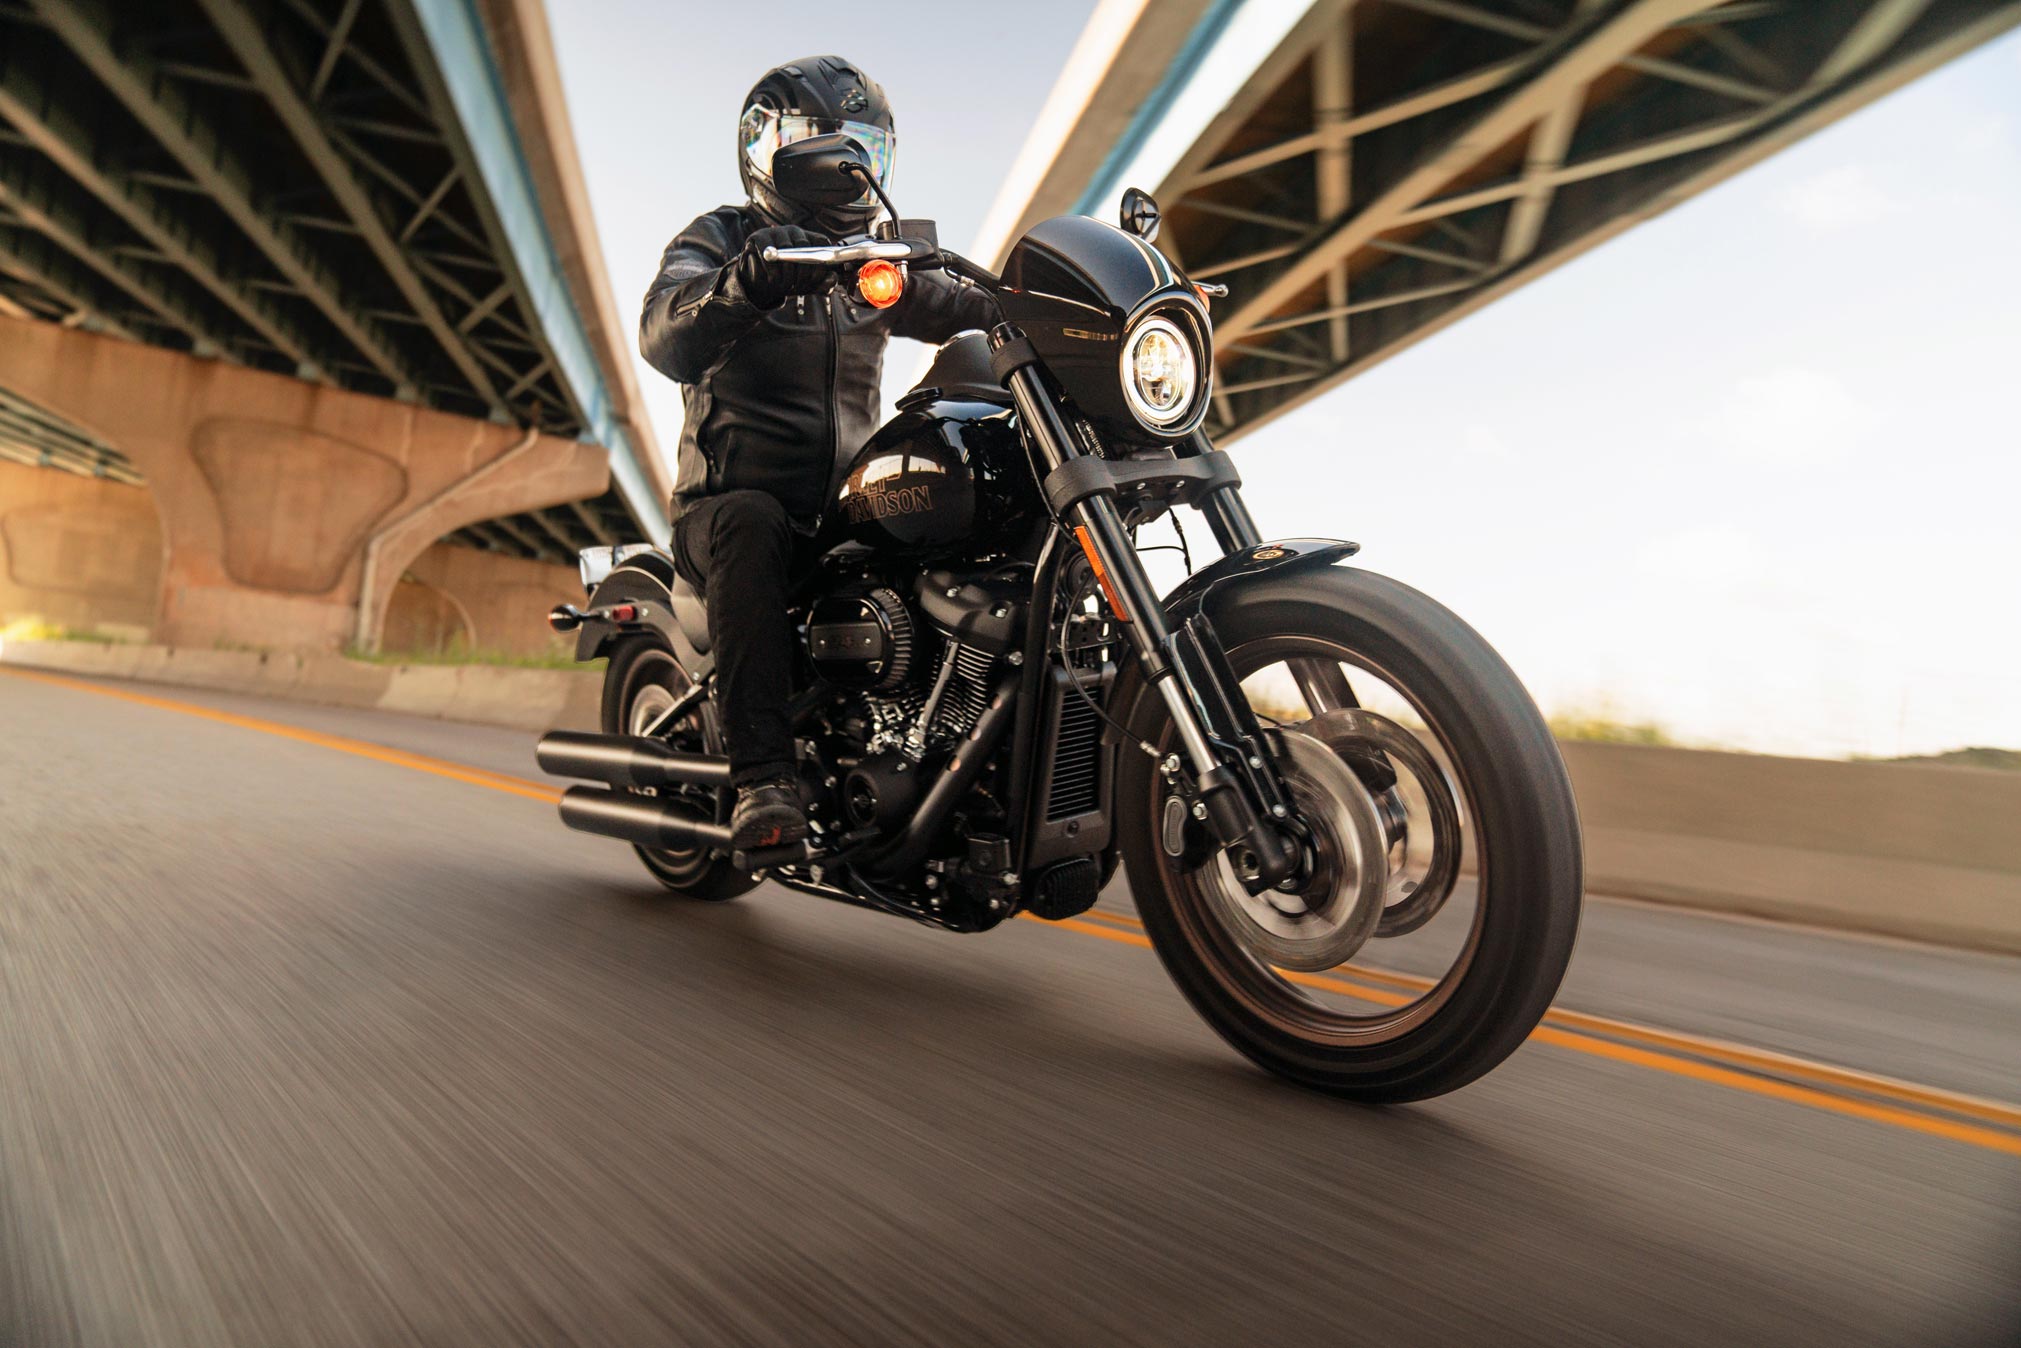 2021 HarleyDavidson Low Rider S Guide • Total Motorcycle